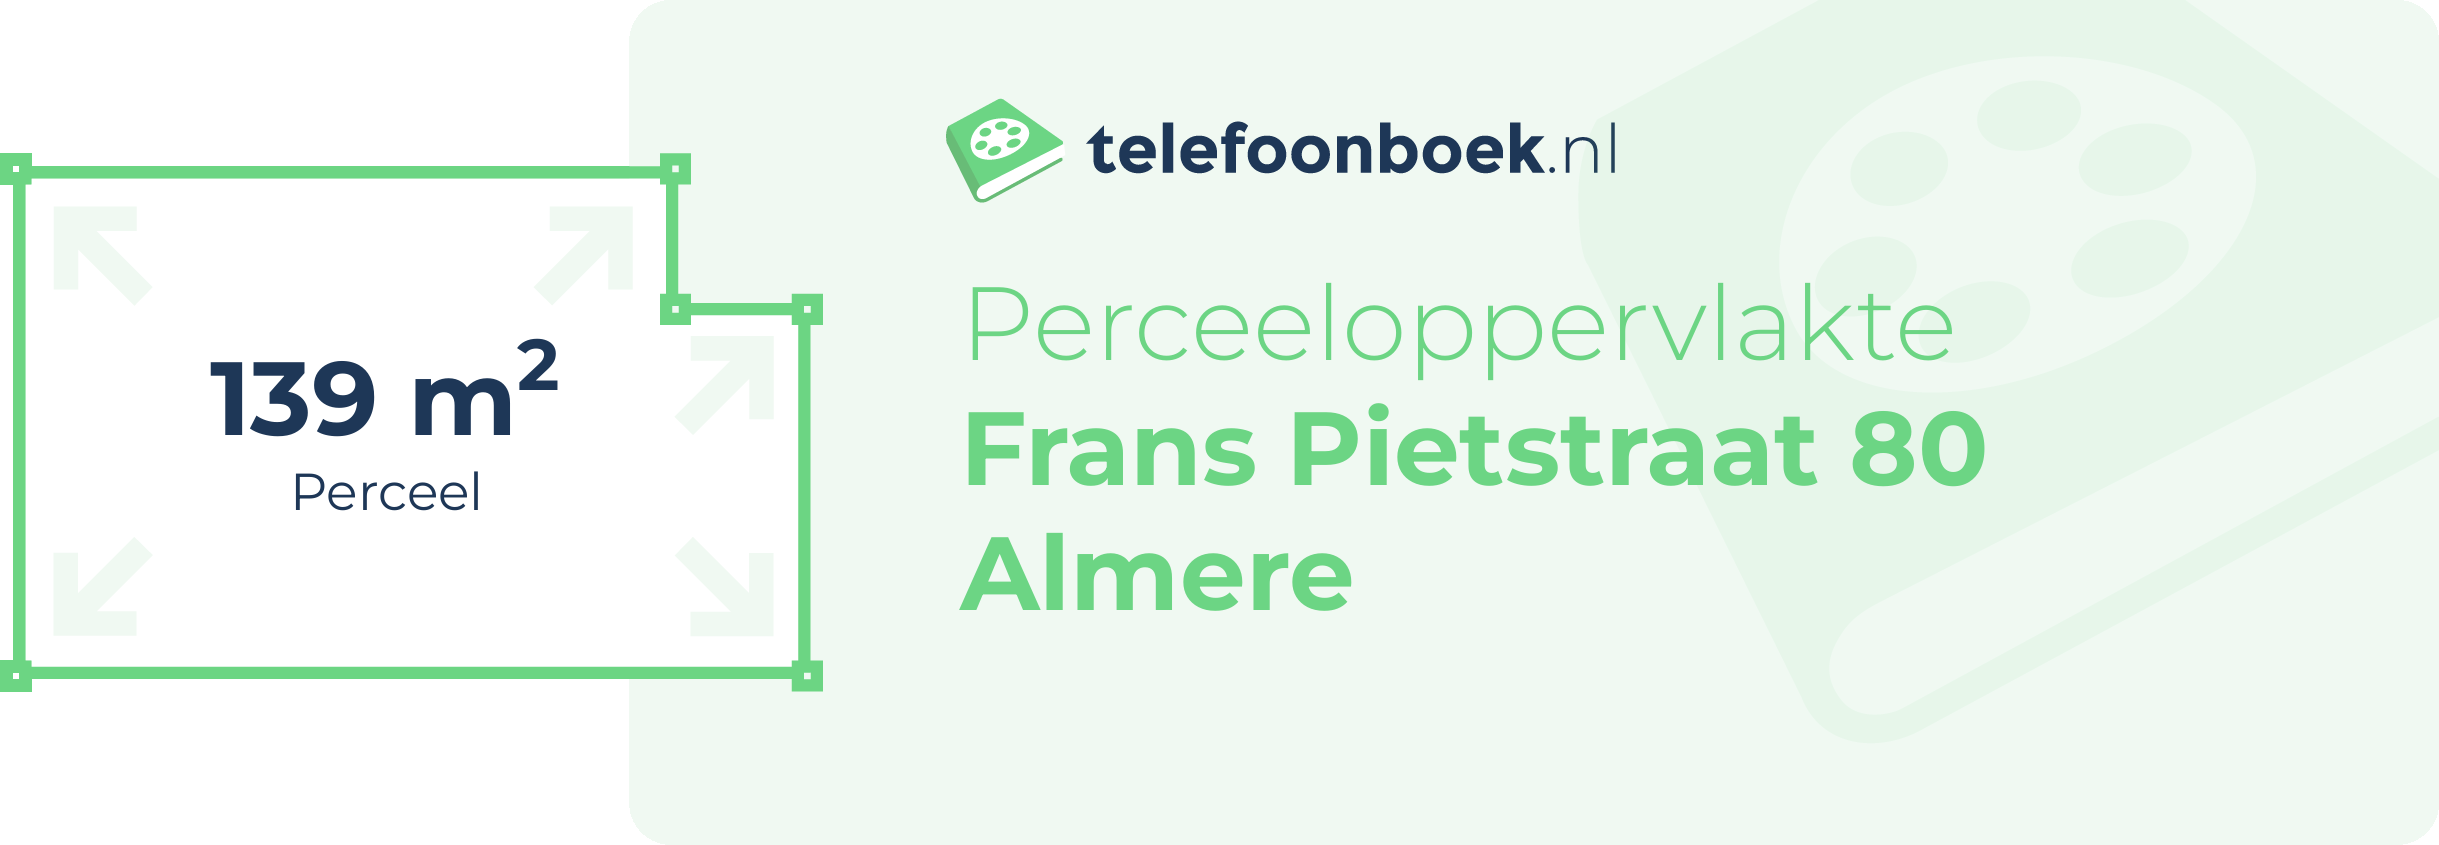 Perceeloppervlakte Frans Pietstraat 80 Almere